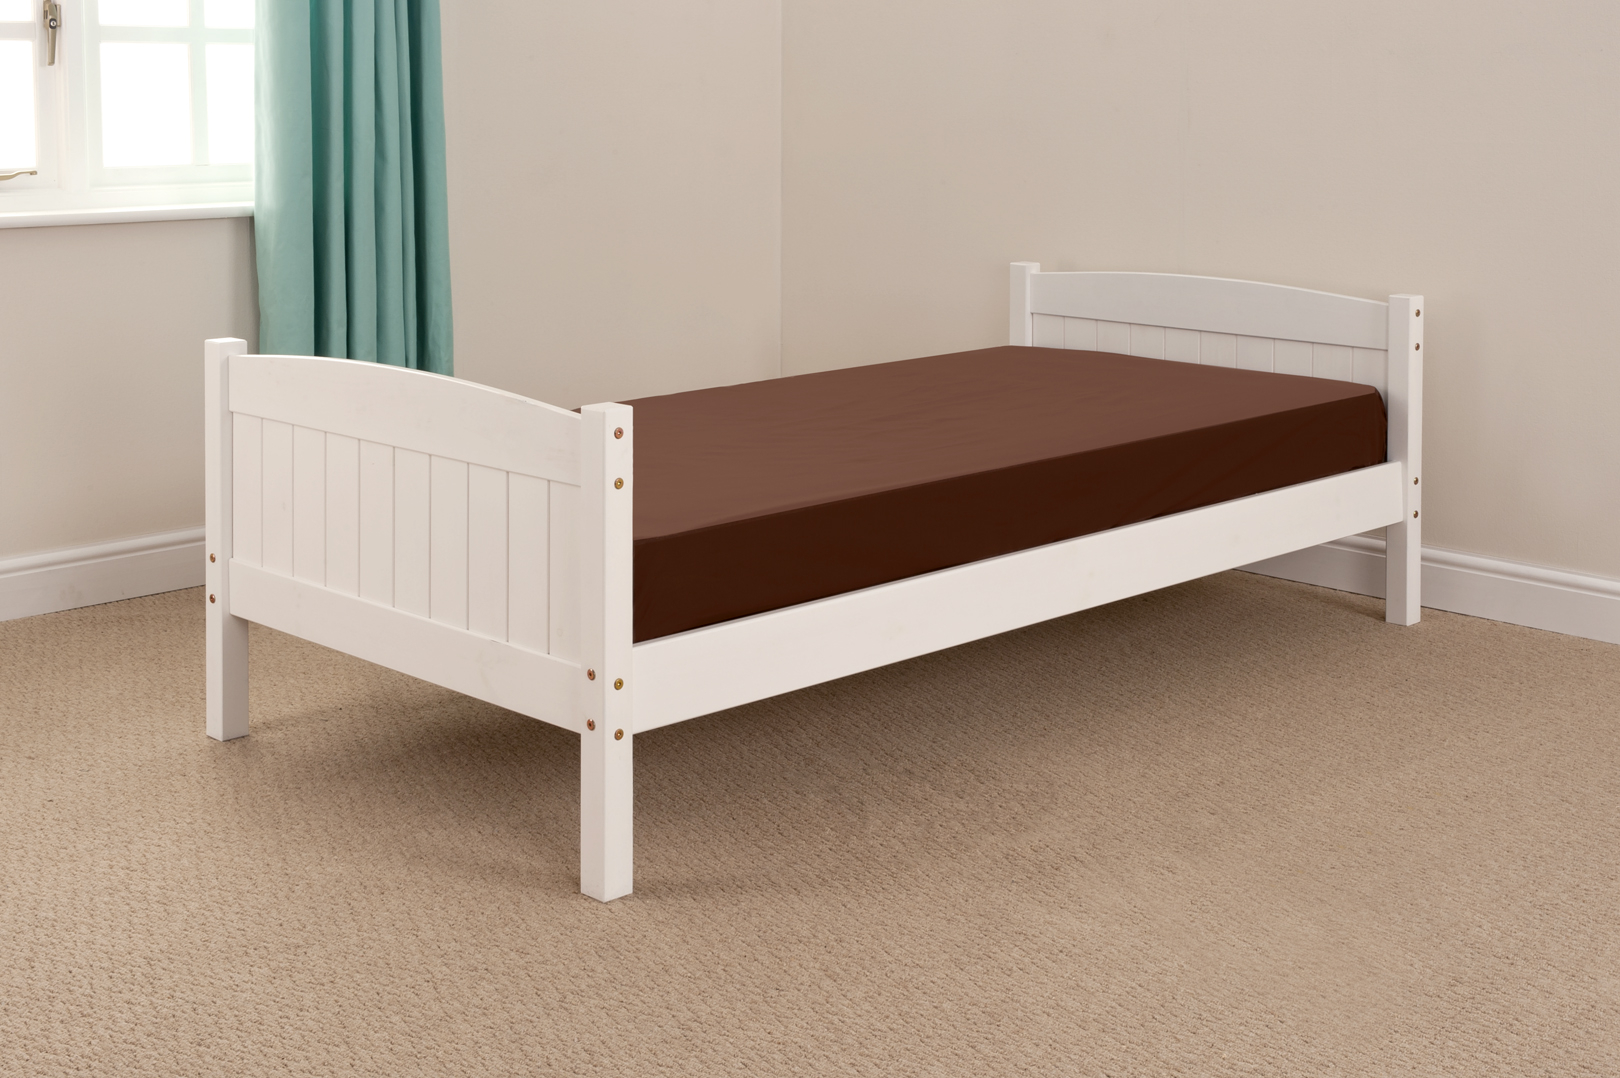 3ft single bed mattress size